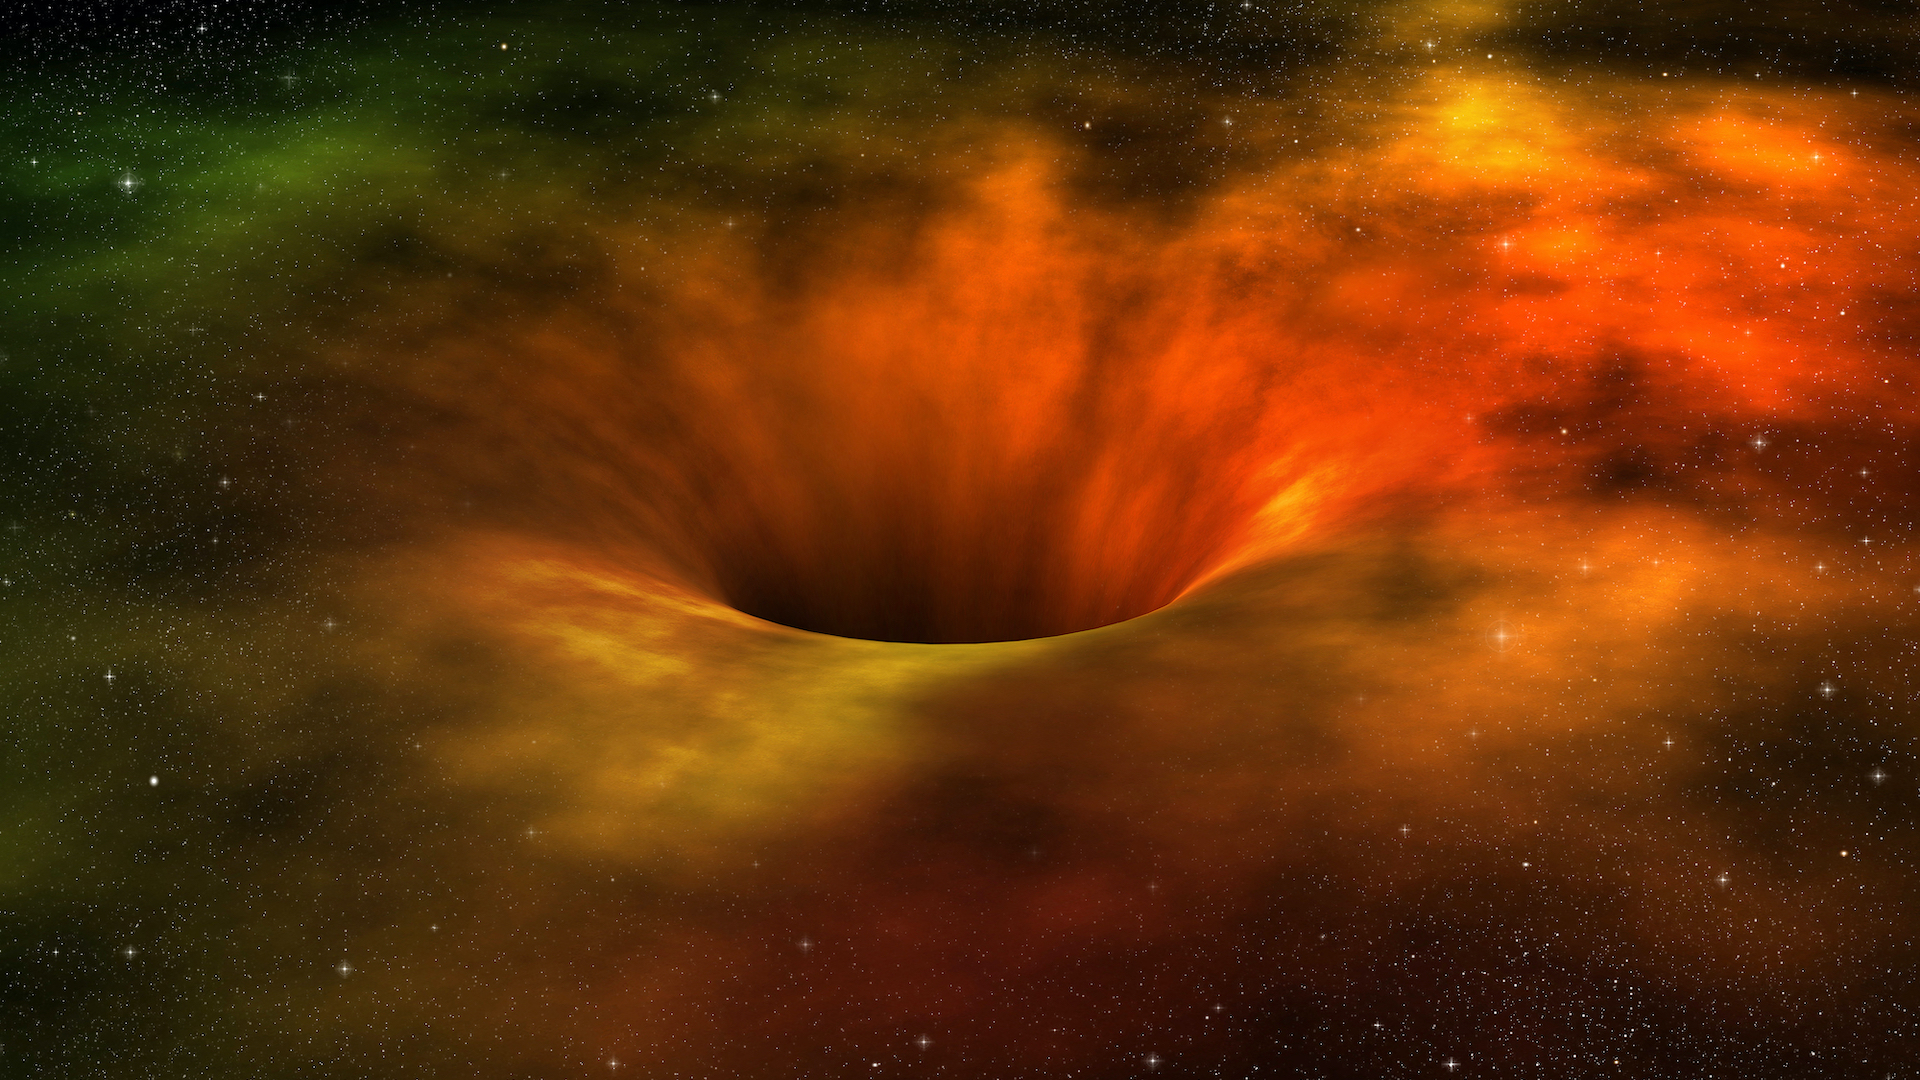 A supermassive black hole